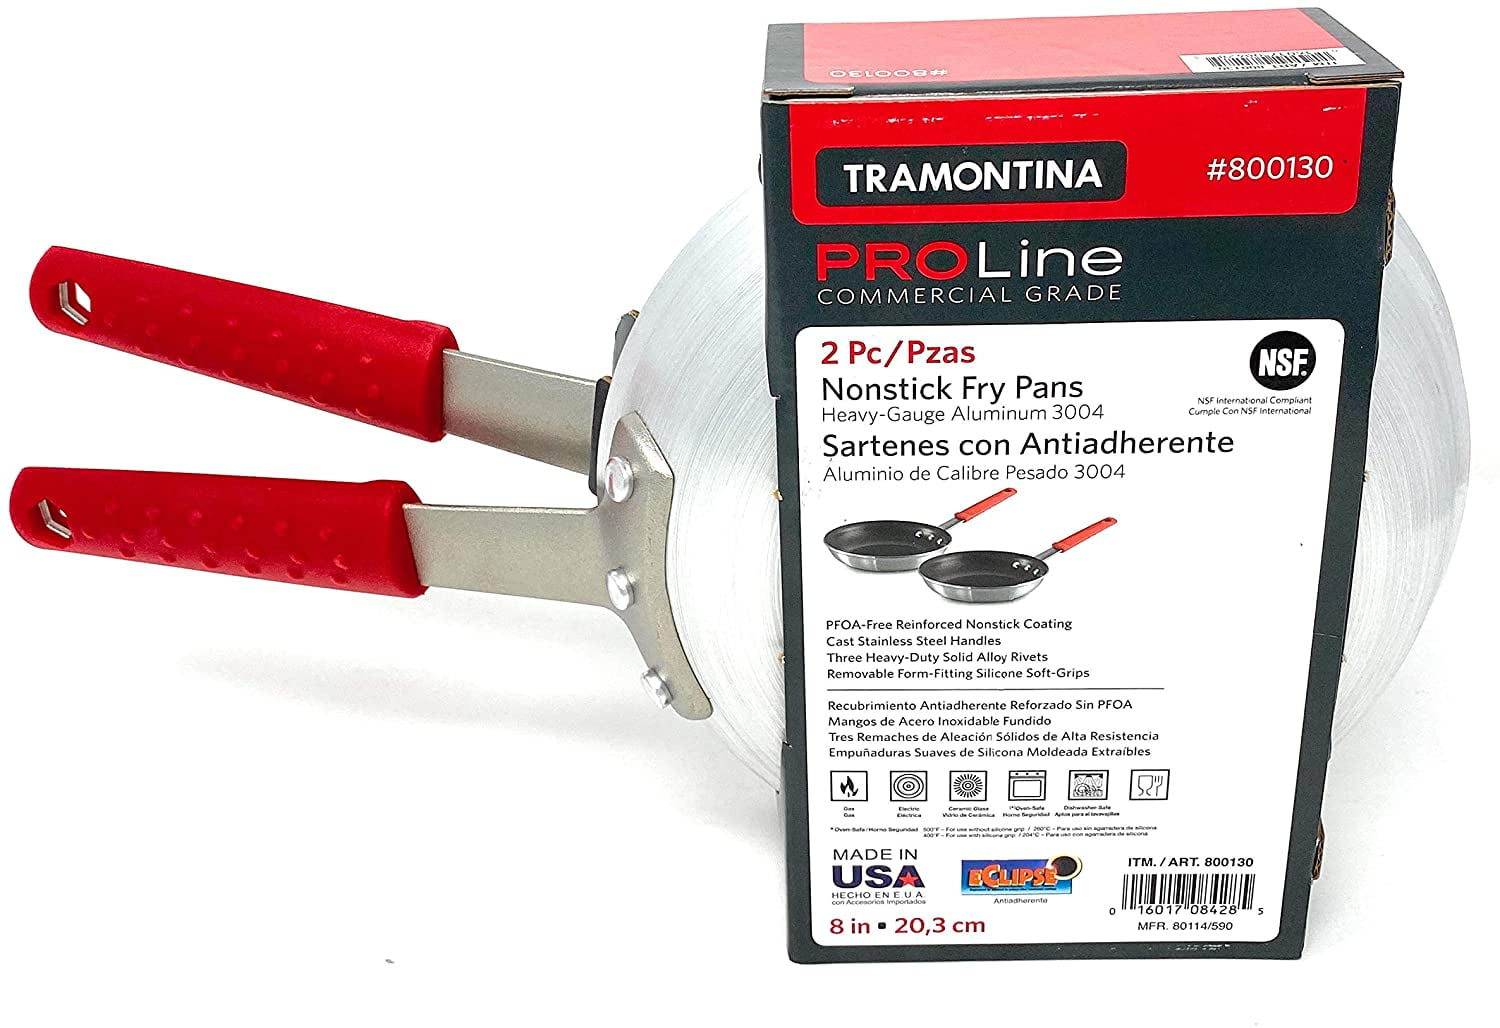  Tramontina Pro Line Commercial Grade Nonstick Fry Pans